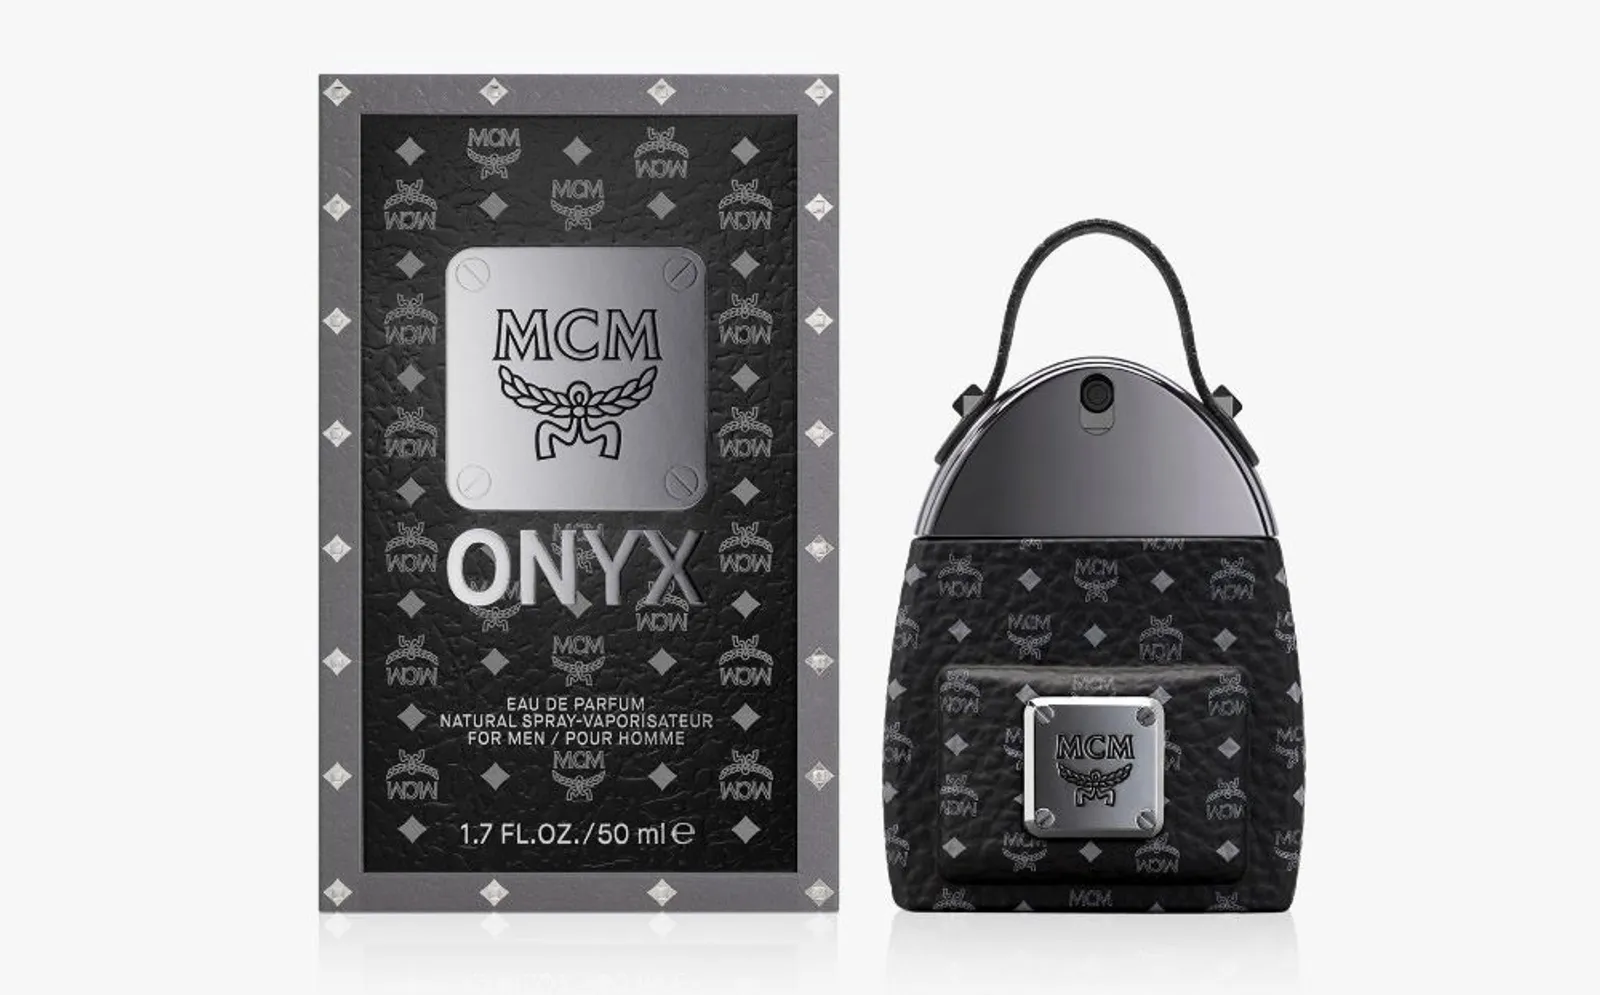 Onyx, Parfum MCM dengan Aroma Woody yang Futuristik